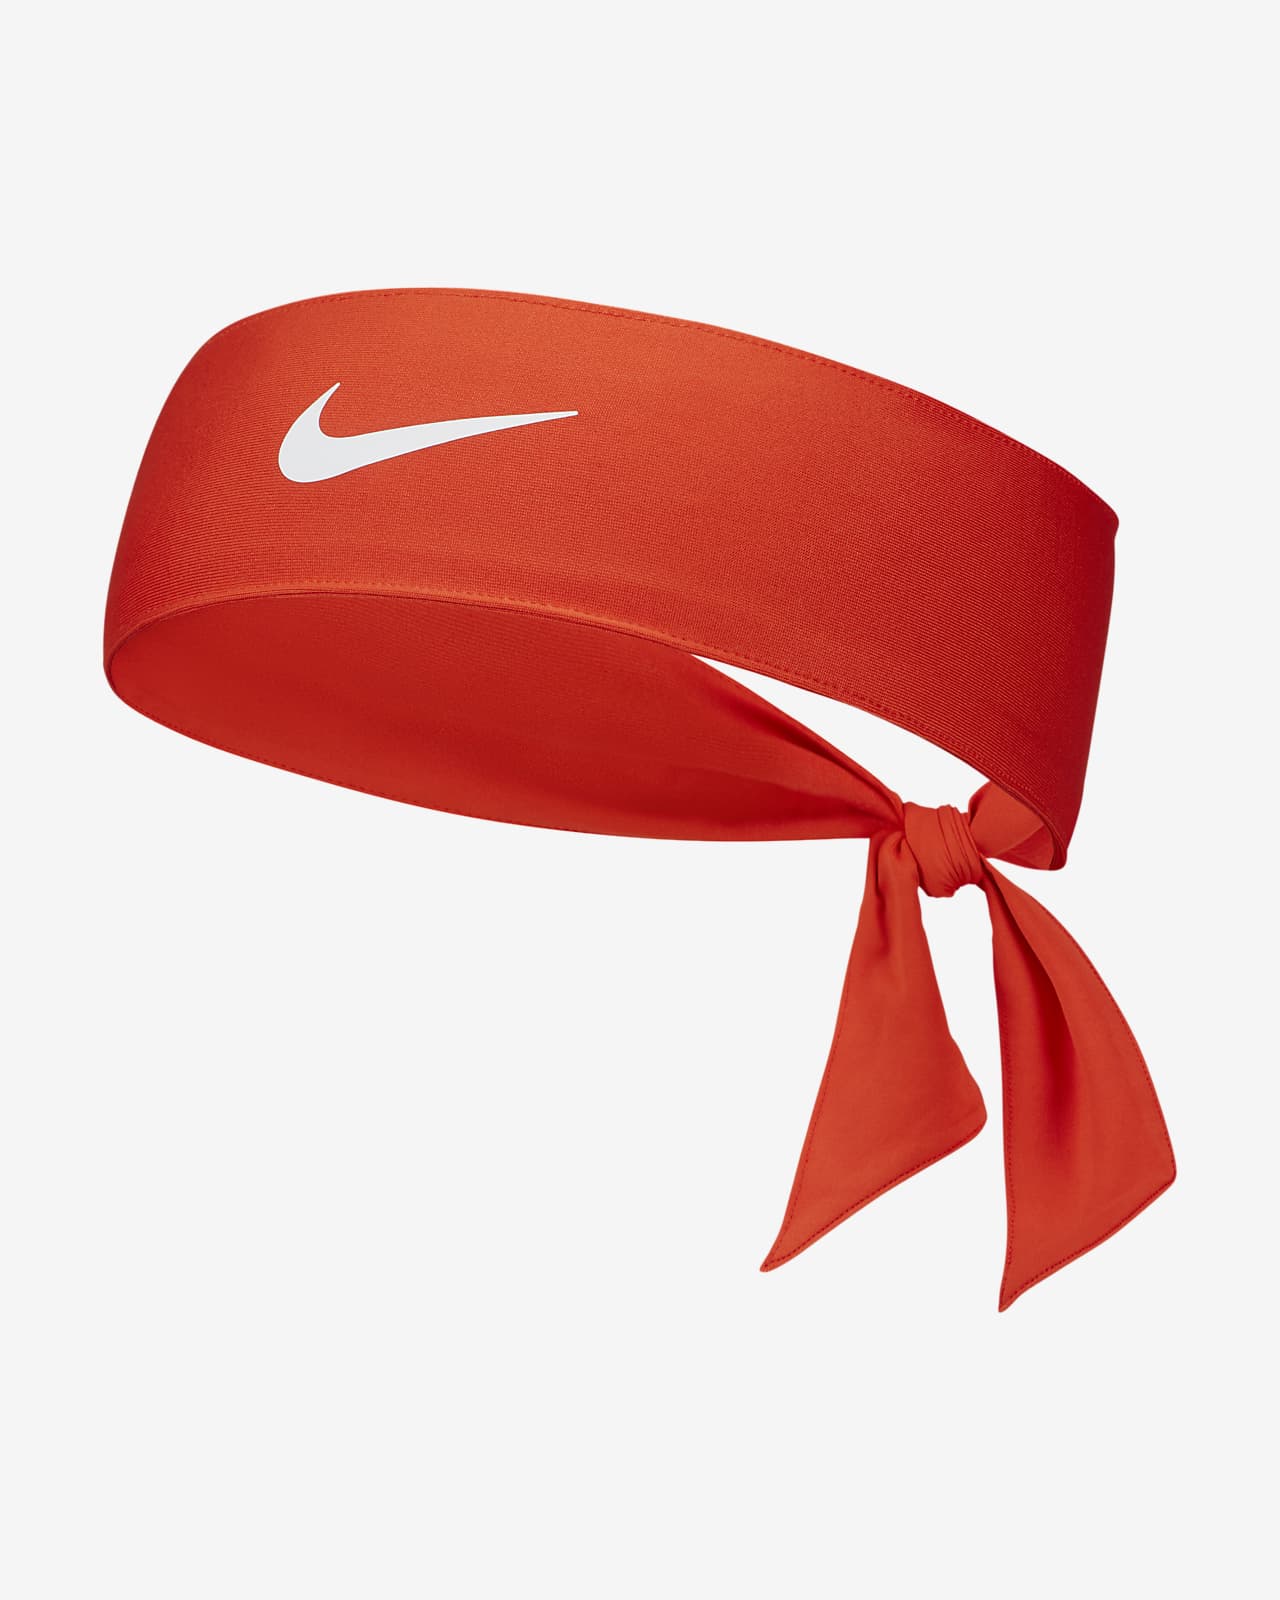 Nike Tennis Headband Tie Gym Fitness Running Run Work Out